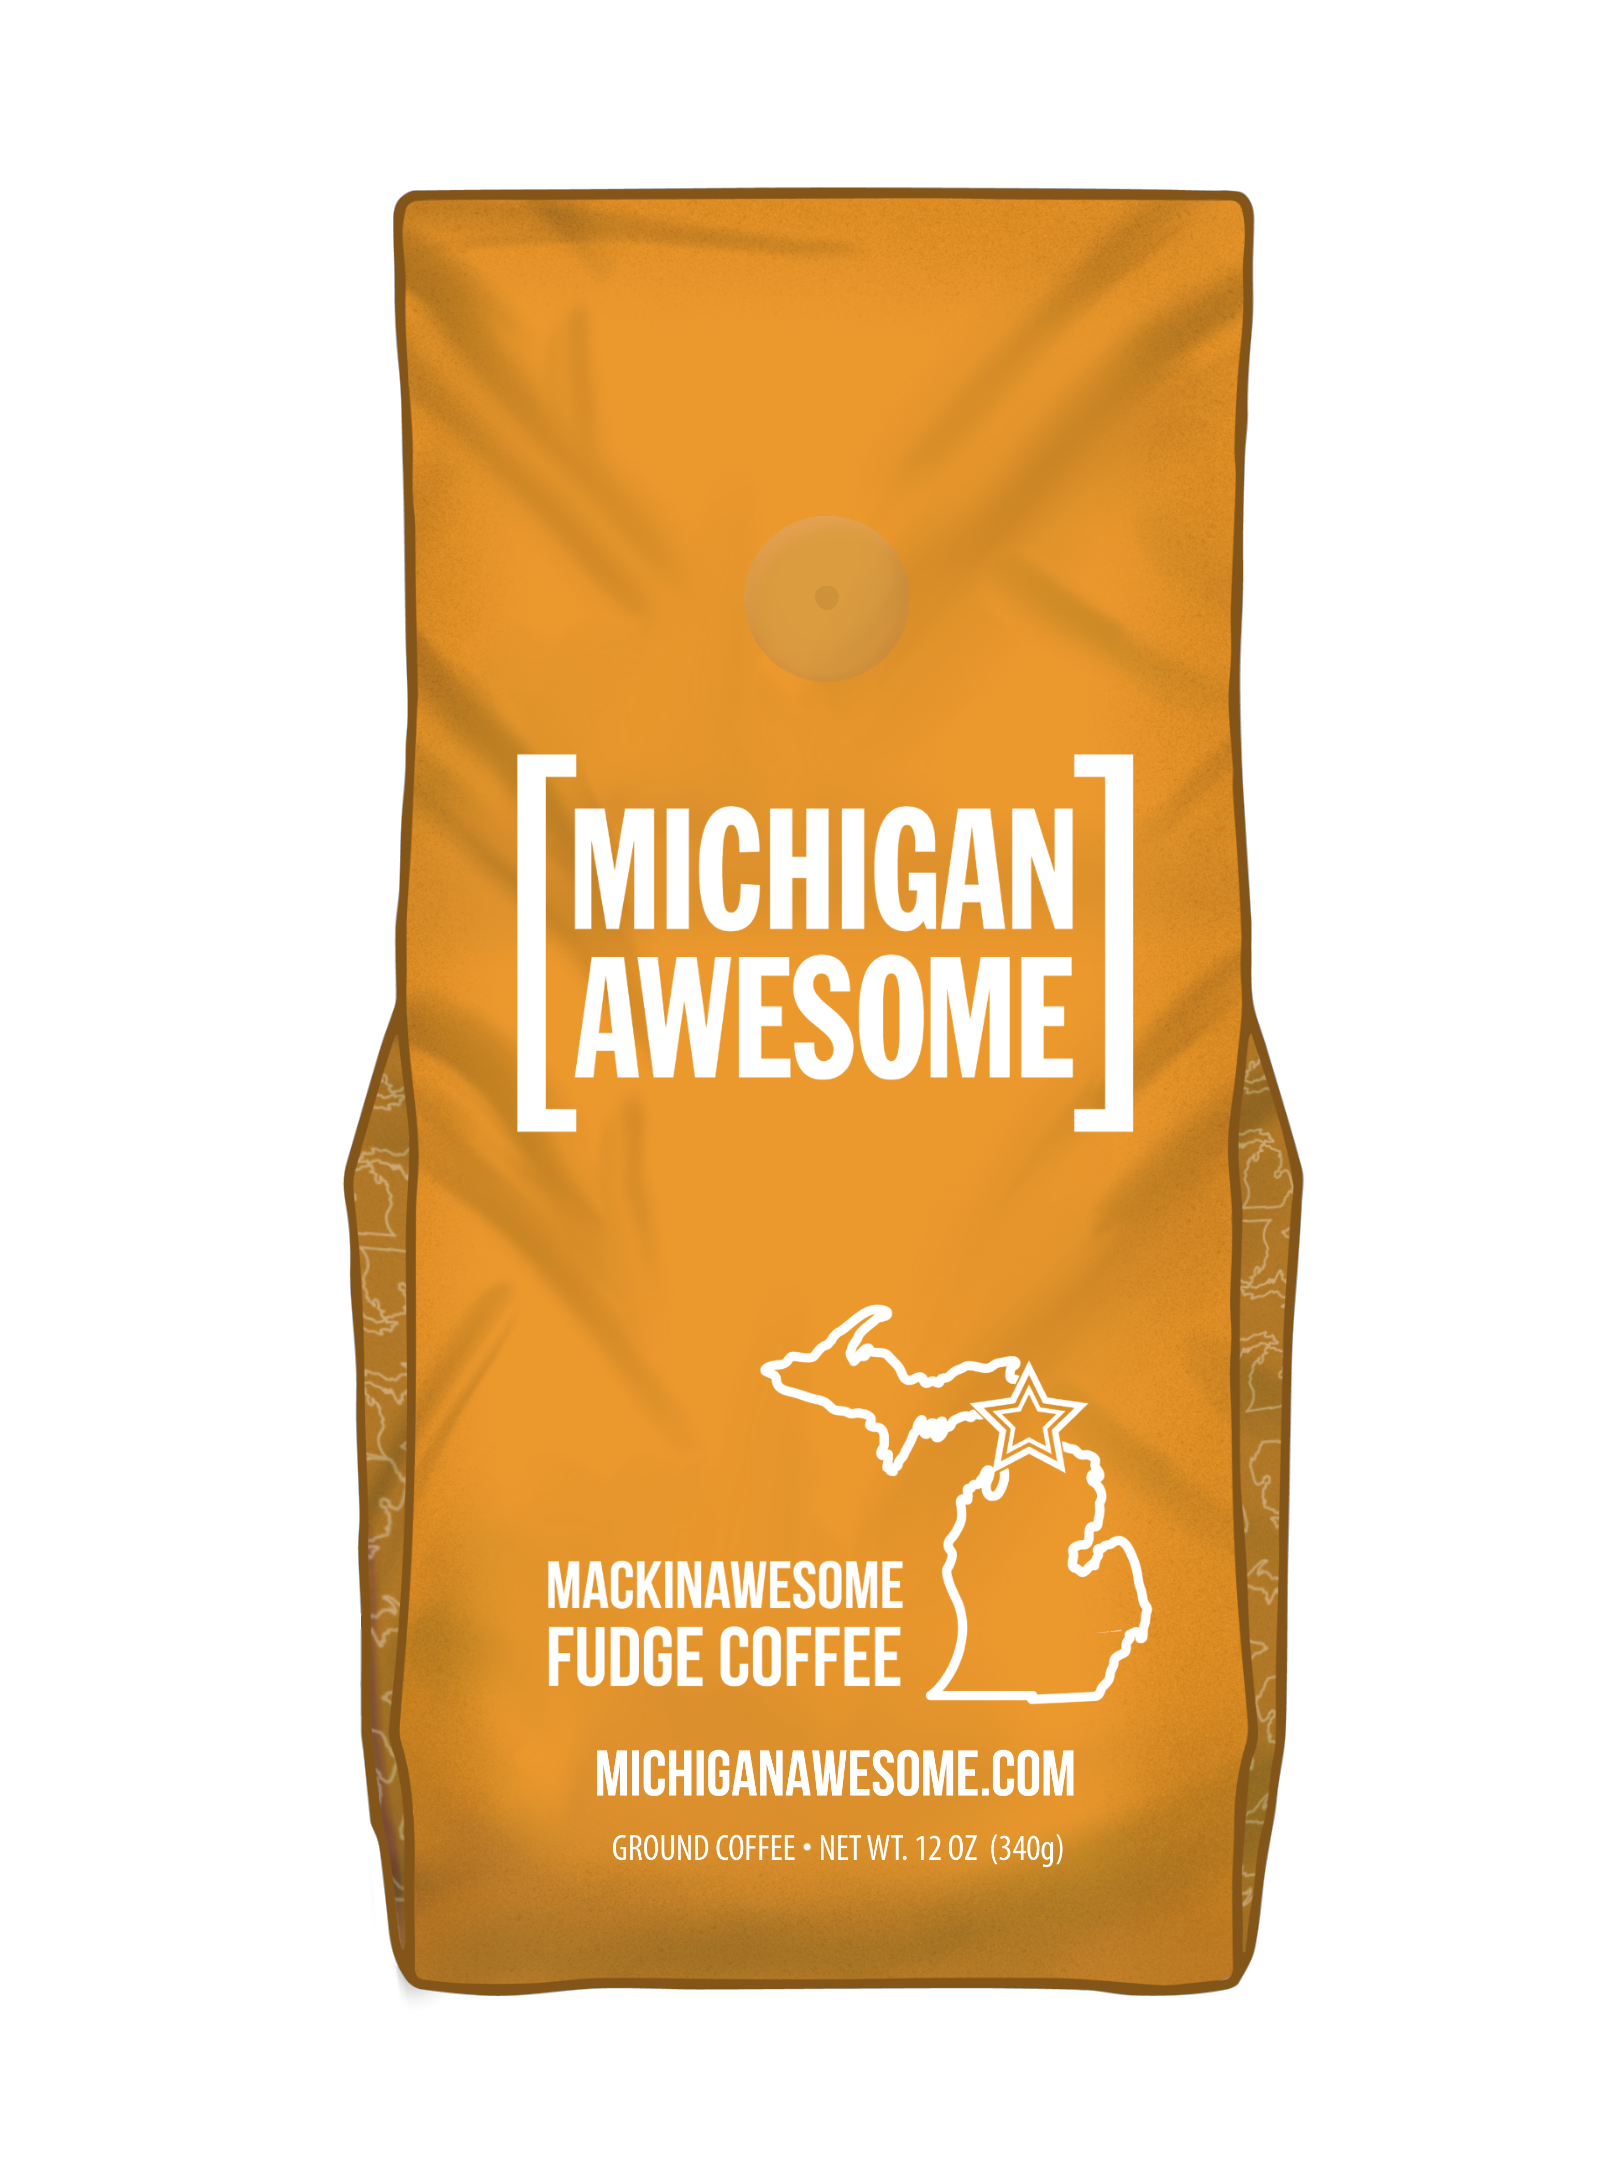 Mackinawesome Fudge Coffee